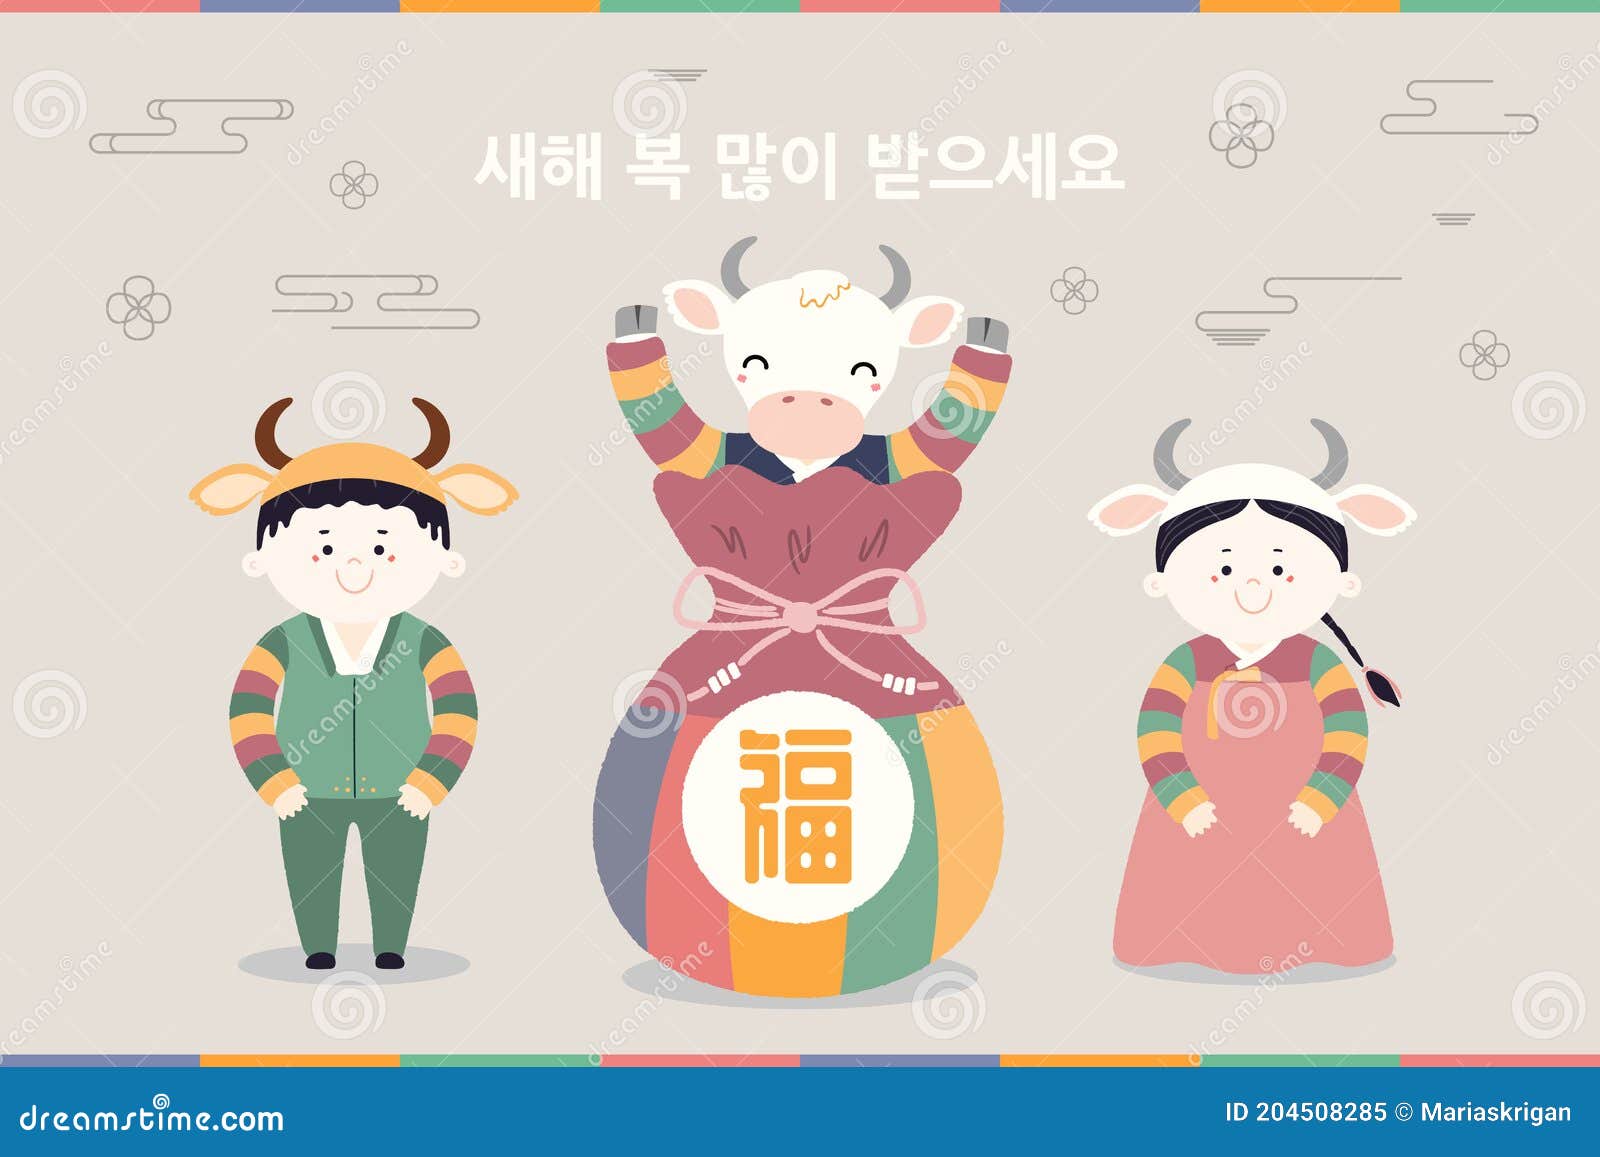 21 Korean New Year Seollal Ox Kids Sebaetdon Stock Vector Illustration Of Cute Graphic